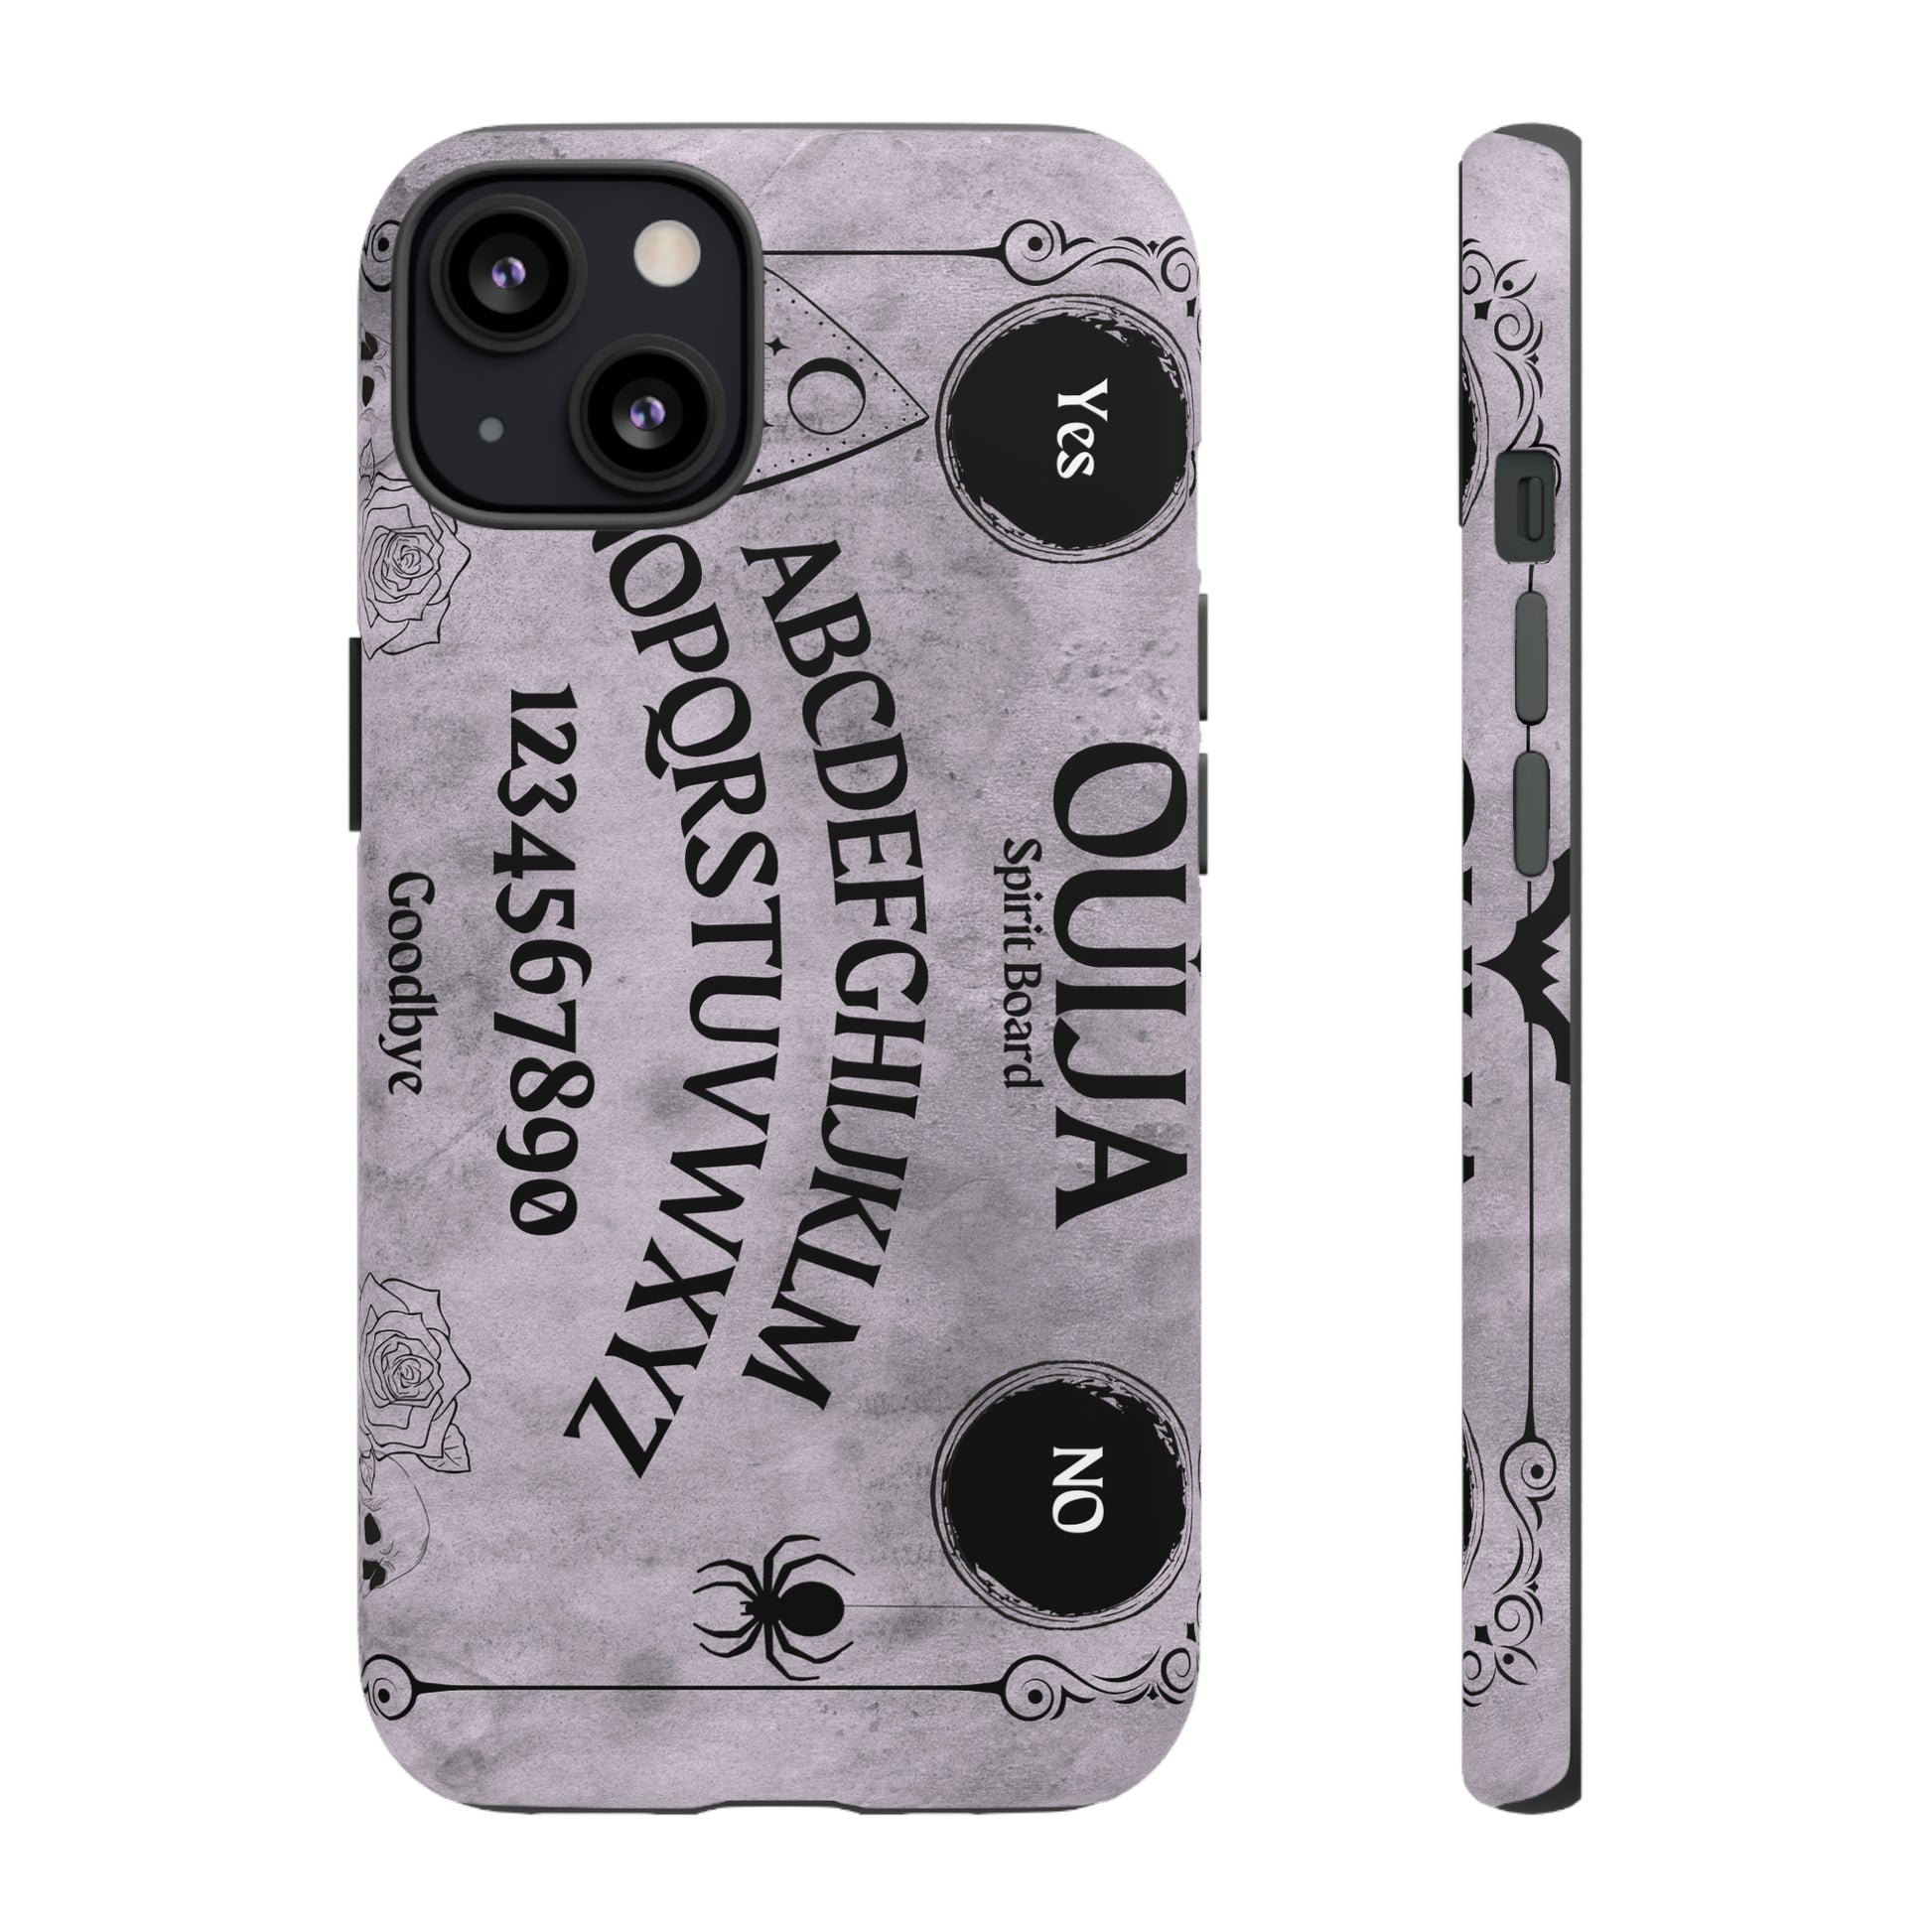 Ouija Board Tough Phone Cases For Samsung iPhone GooglePhone CaseVTZdesignsiPhone 13MatteAccessoriesGlossyhalloween